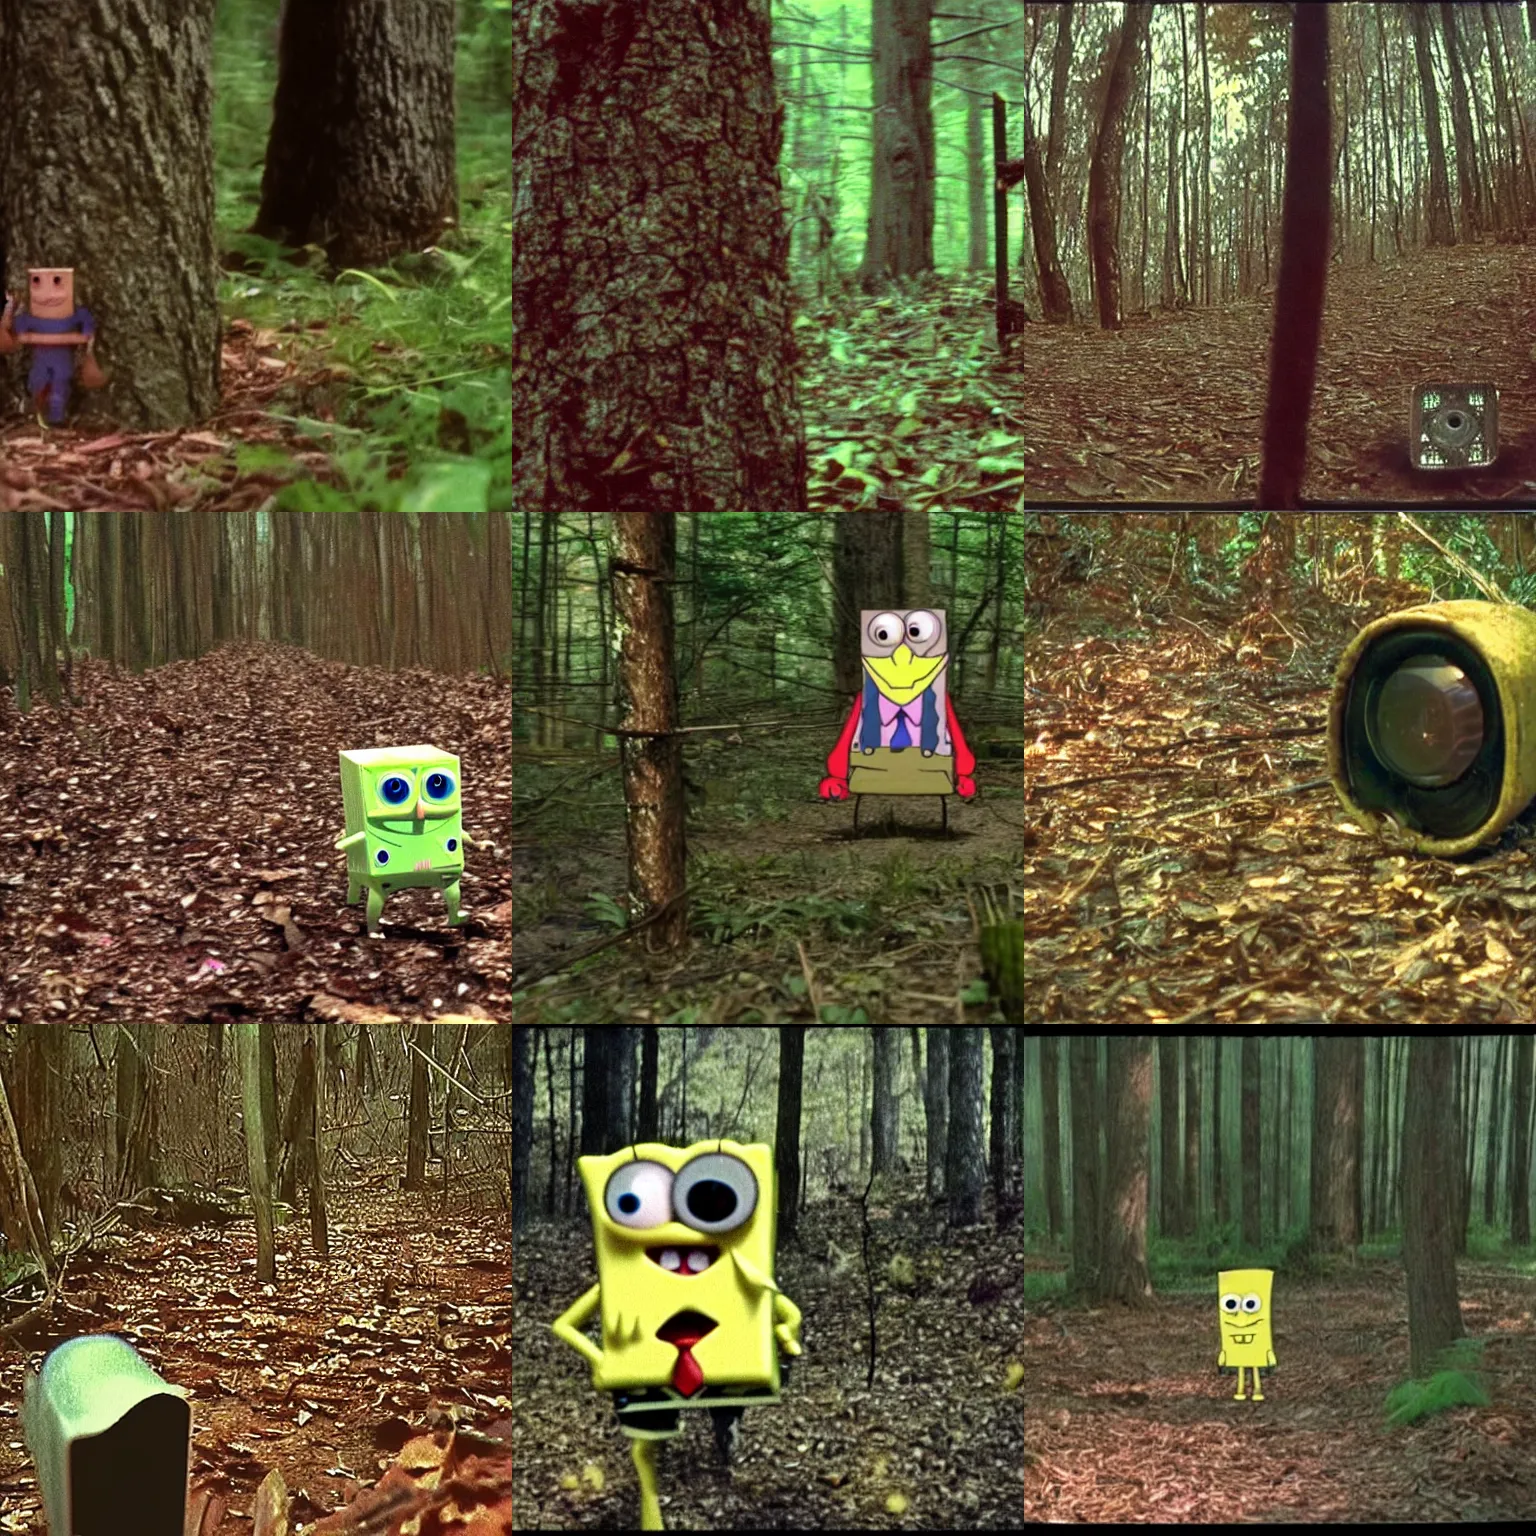 Prompt: film still blair witch project trail cam footage photo of spongebob squarepants